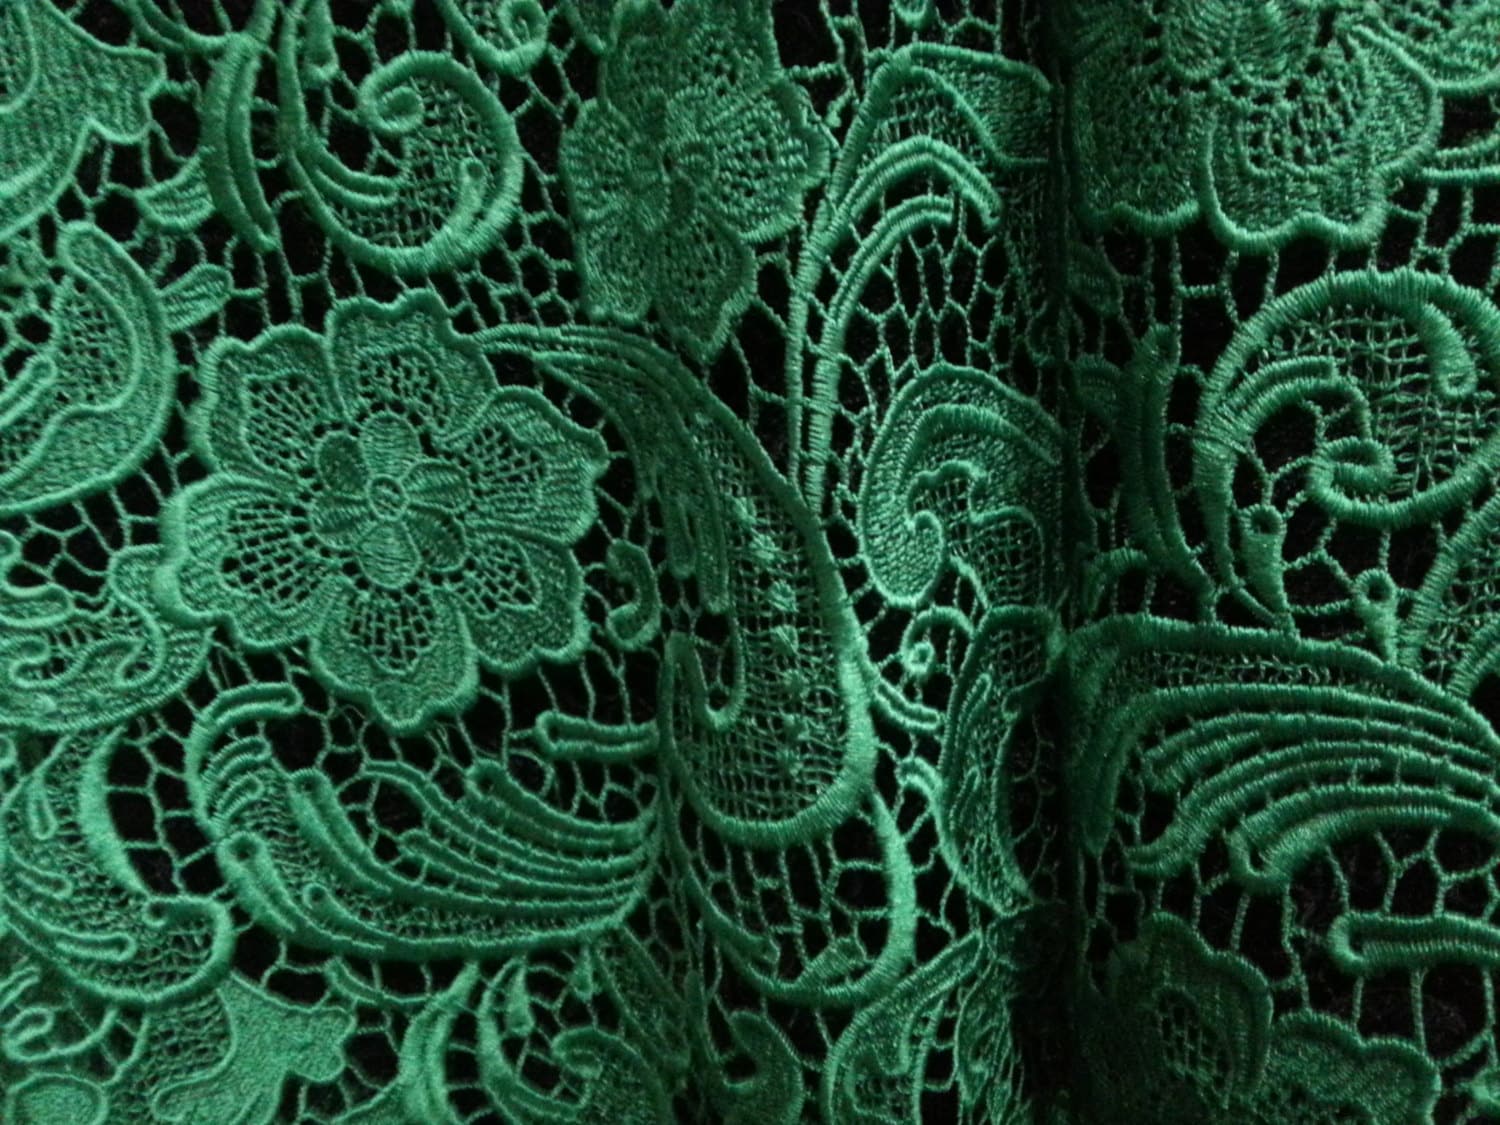 Emerald Green Lace Fabric,venise Lace Fabric, Bridal Lace Fabric